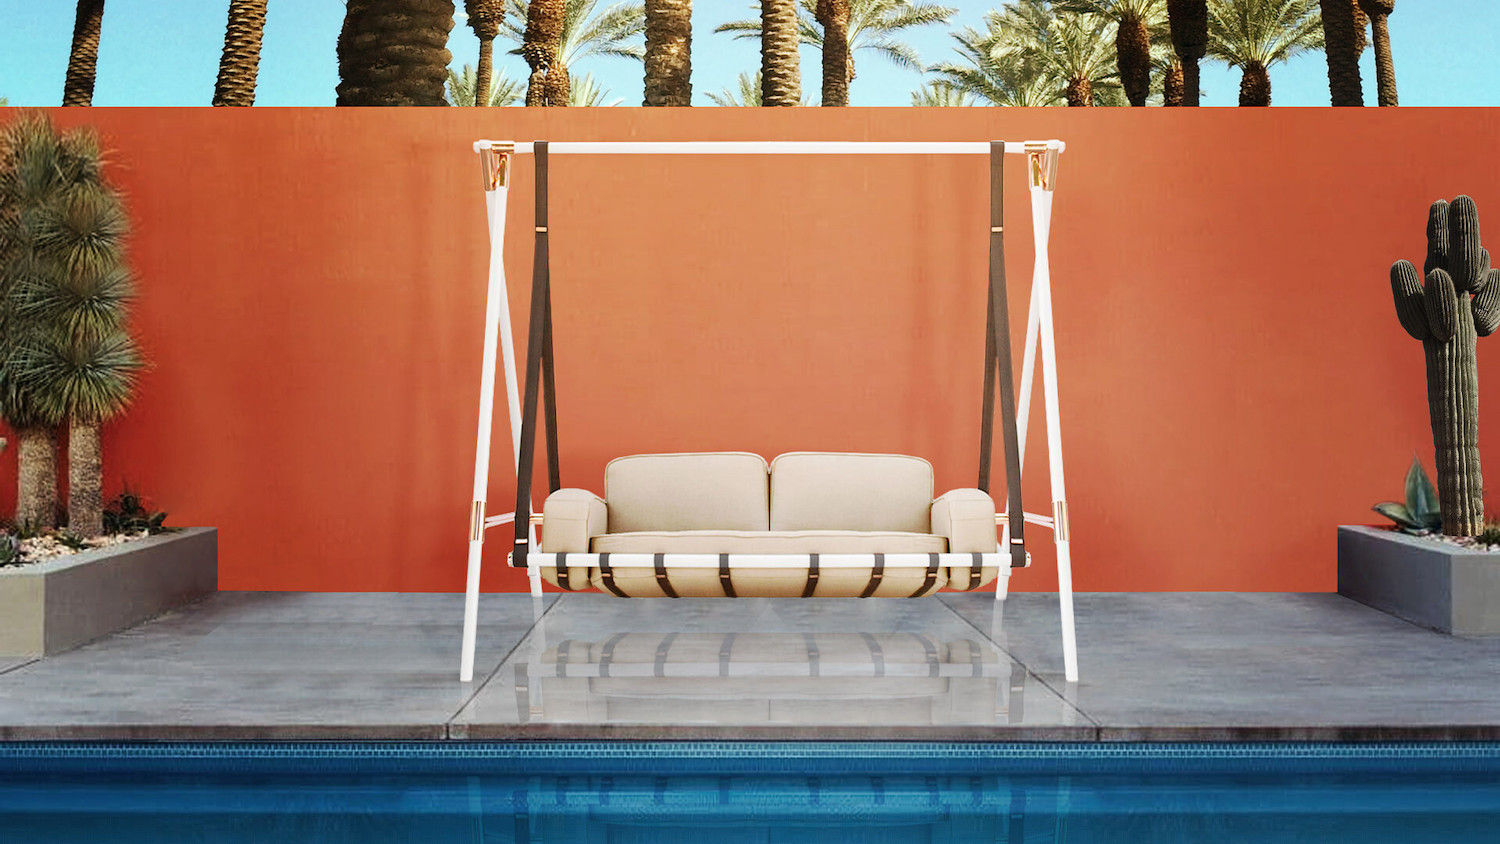 Luxury outdoor furnishings to update your pool deck, terrace or backyard